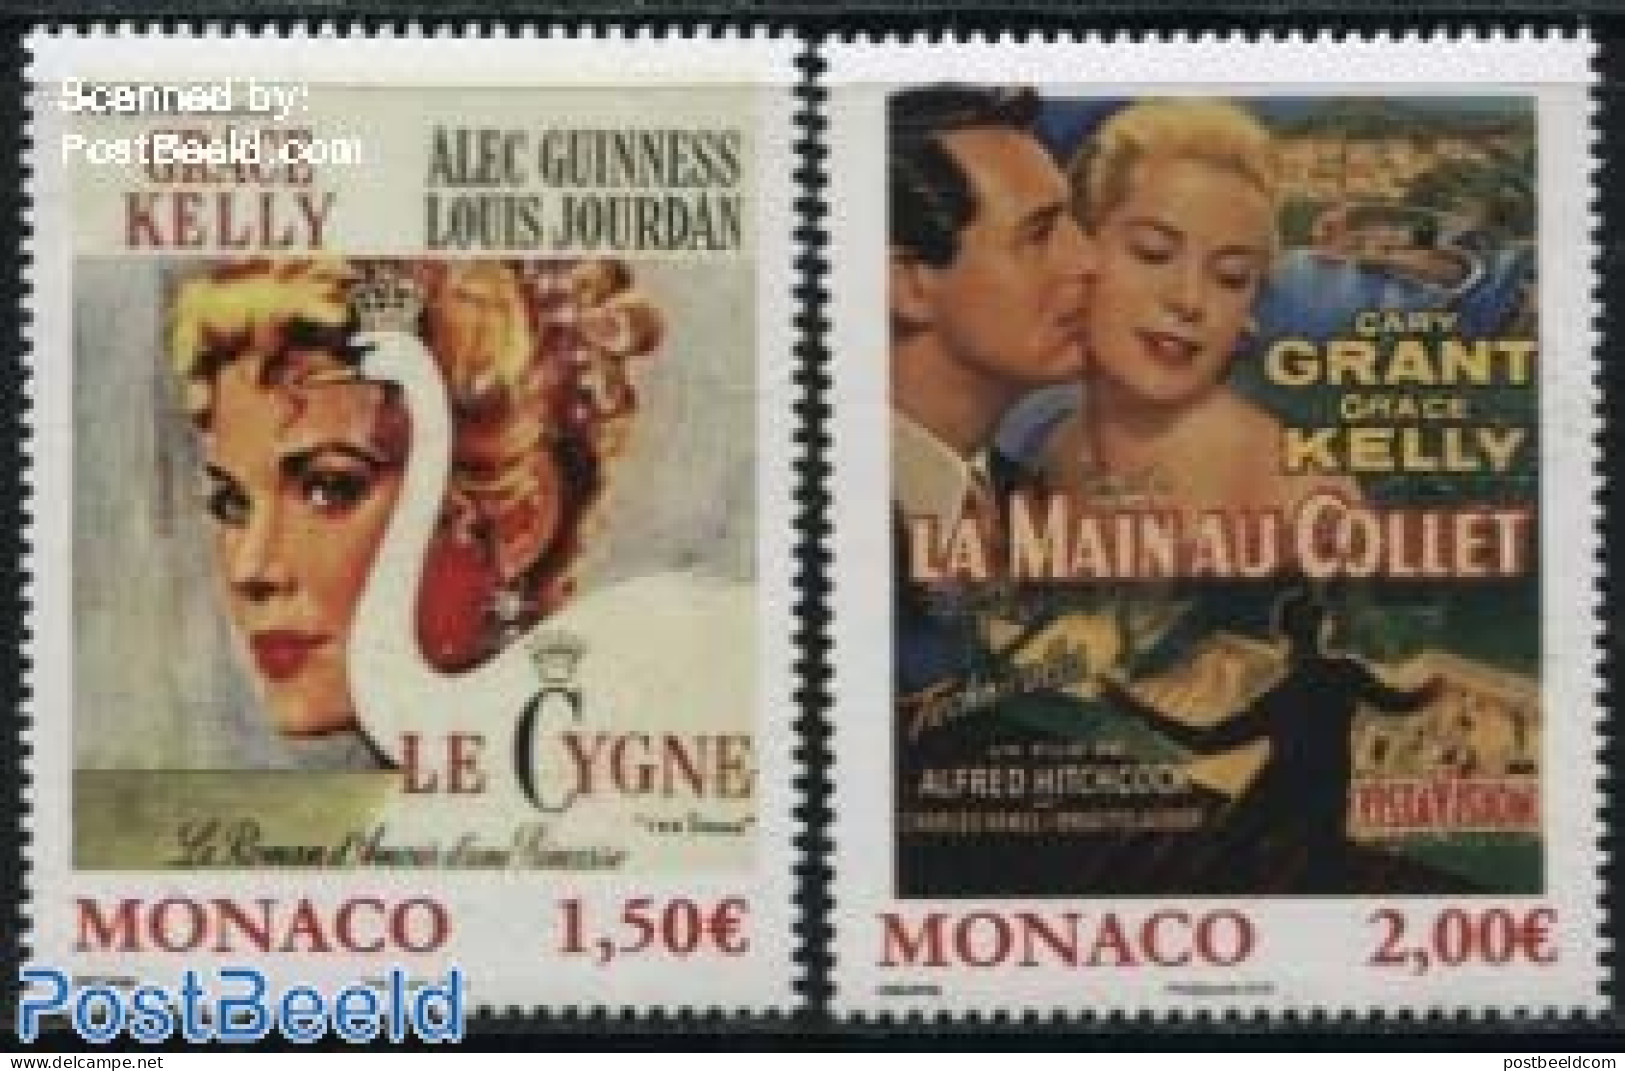 Monaco 2015 Film Posters With Grace Kelly 2v, Mint NH, Performance Art - Movie Stars - Art - Poster Art - Ungebraucht